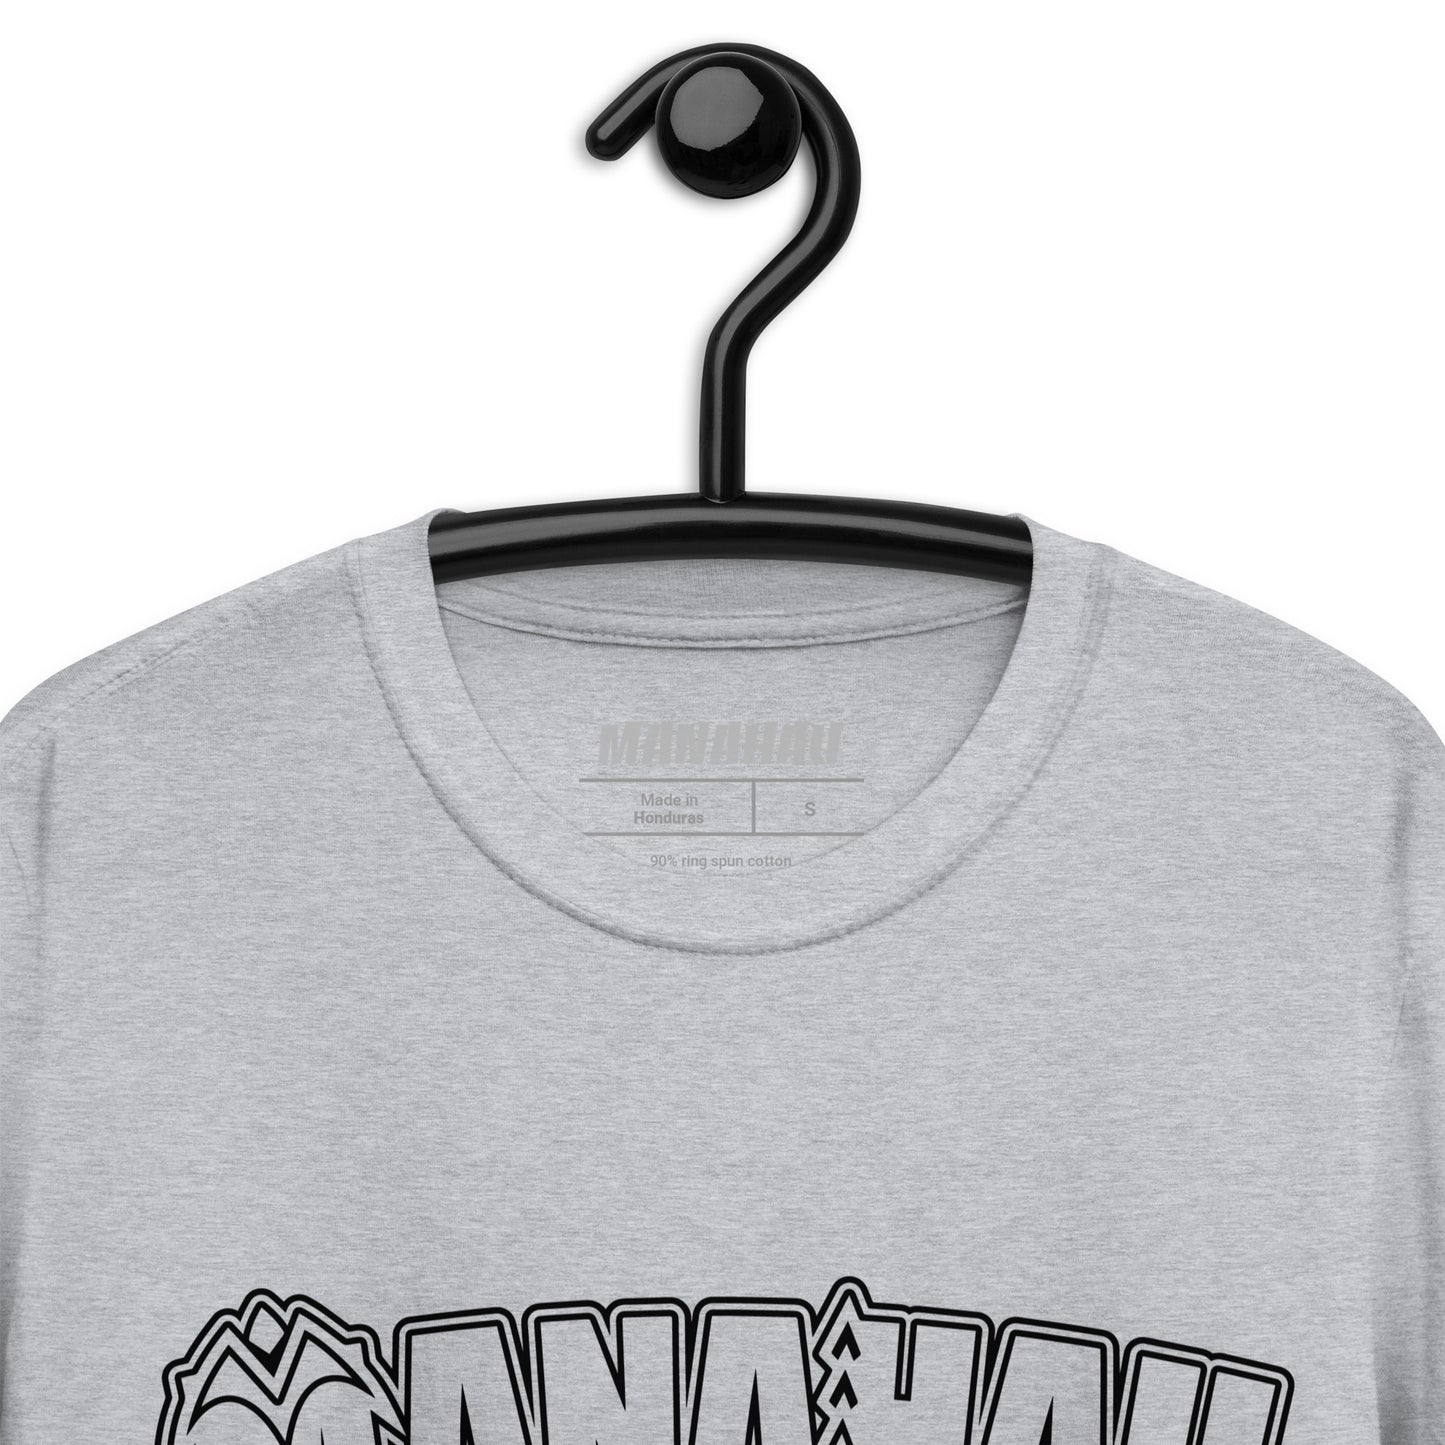 Manahau Warp Logo T-shirt_Black Print &lt;On Demand&gt;